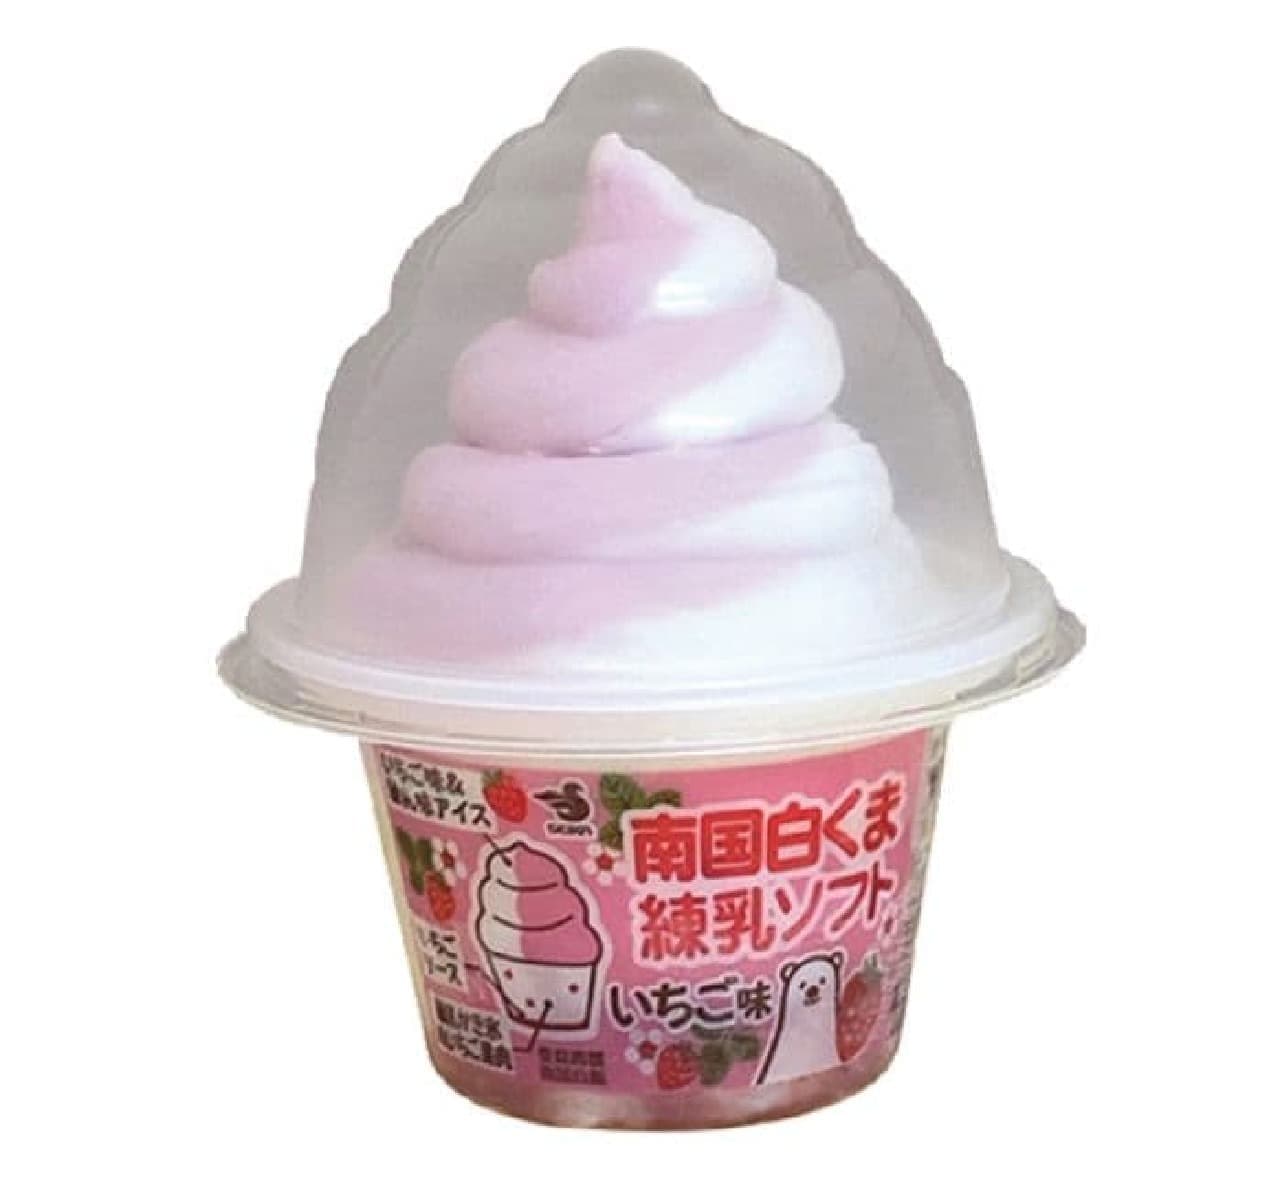 FamilyMart "Seika Tropical White Condensed Milk Soft, Strawberry Flavor